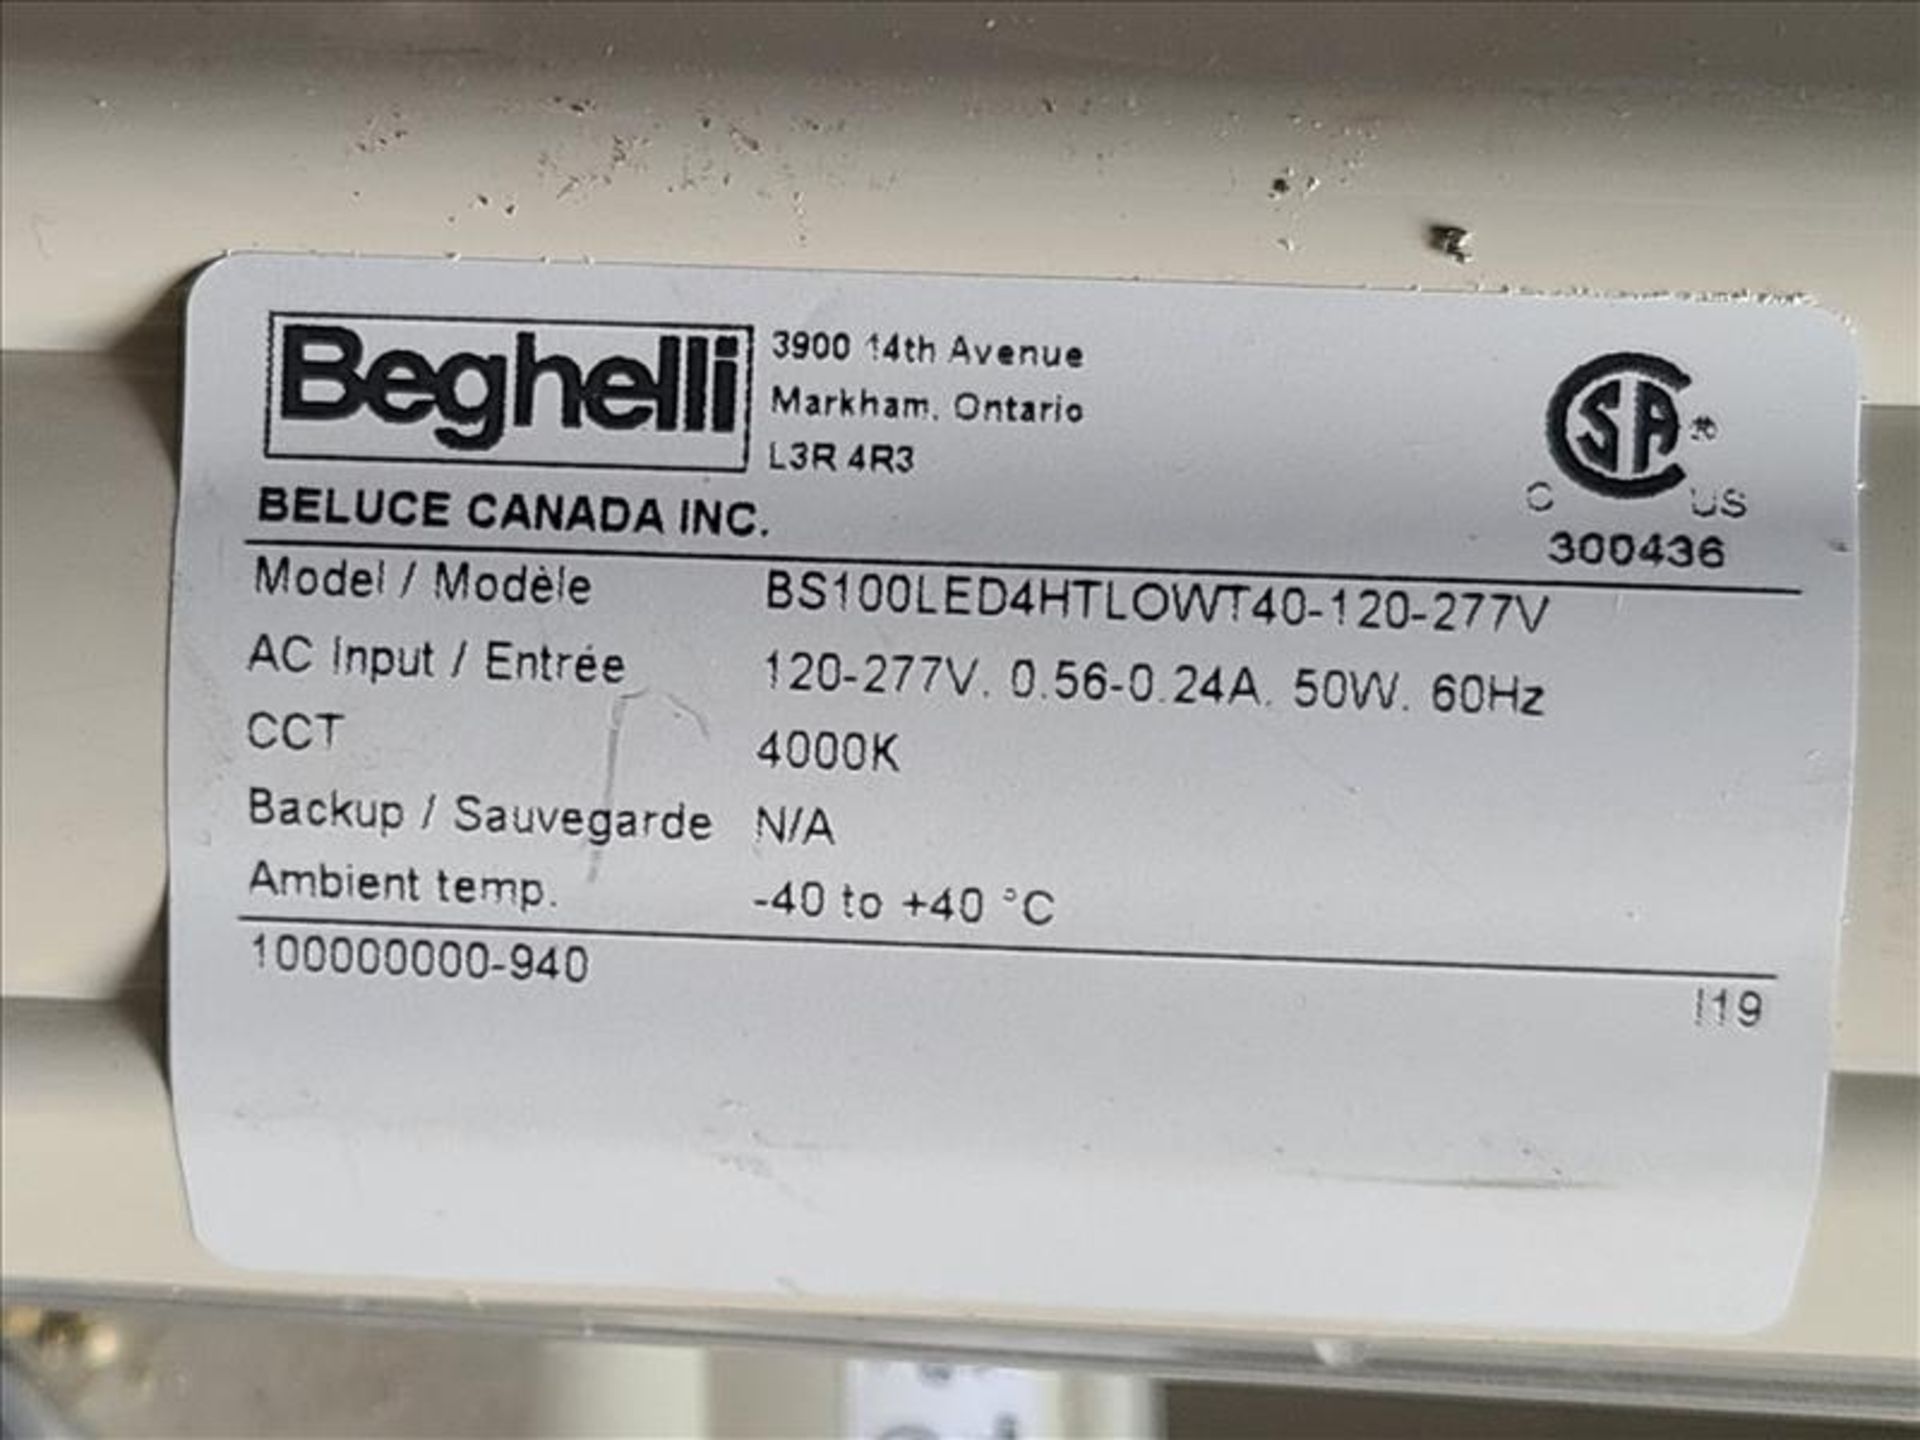 Beghelli Illumina Vapor Tight Lights, model BS100LEDX4HTHOWT40, 120-277V, 100W, 60Hz - Image 4 of 7